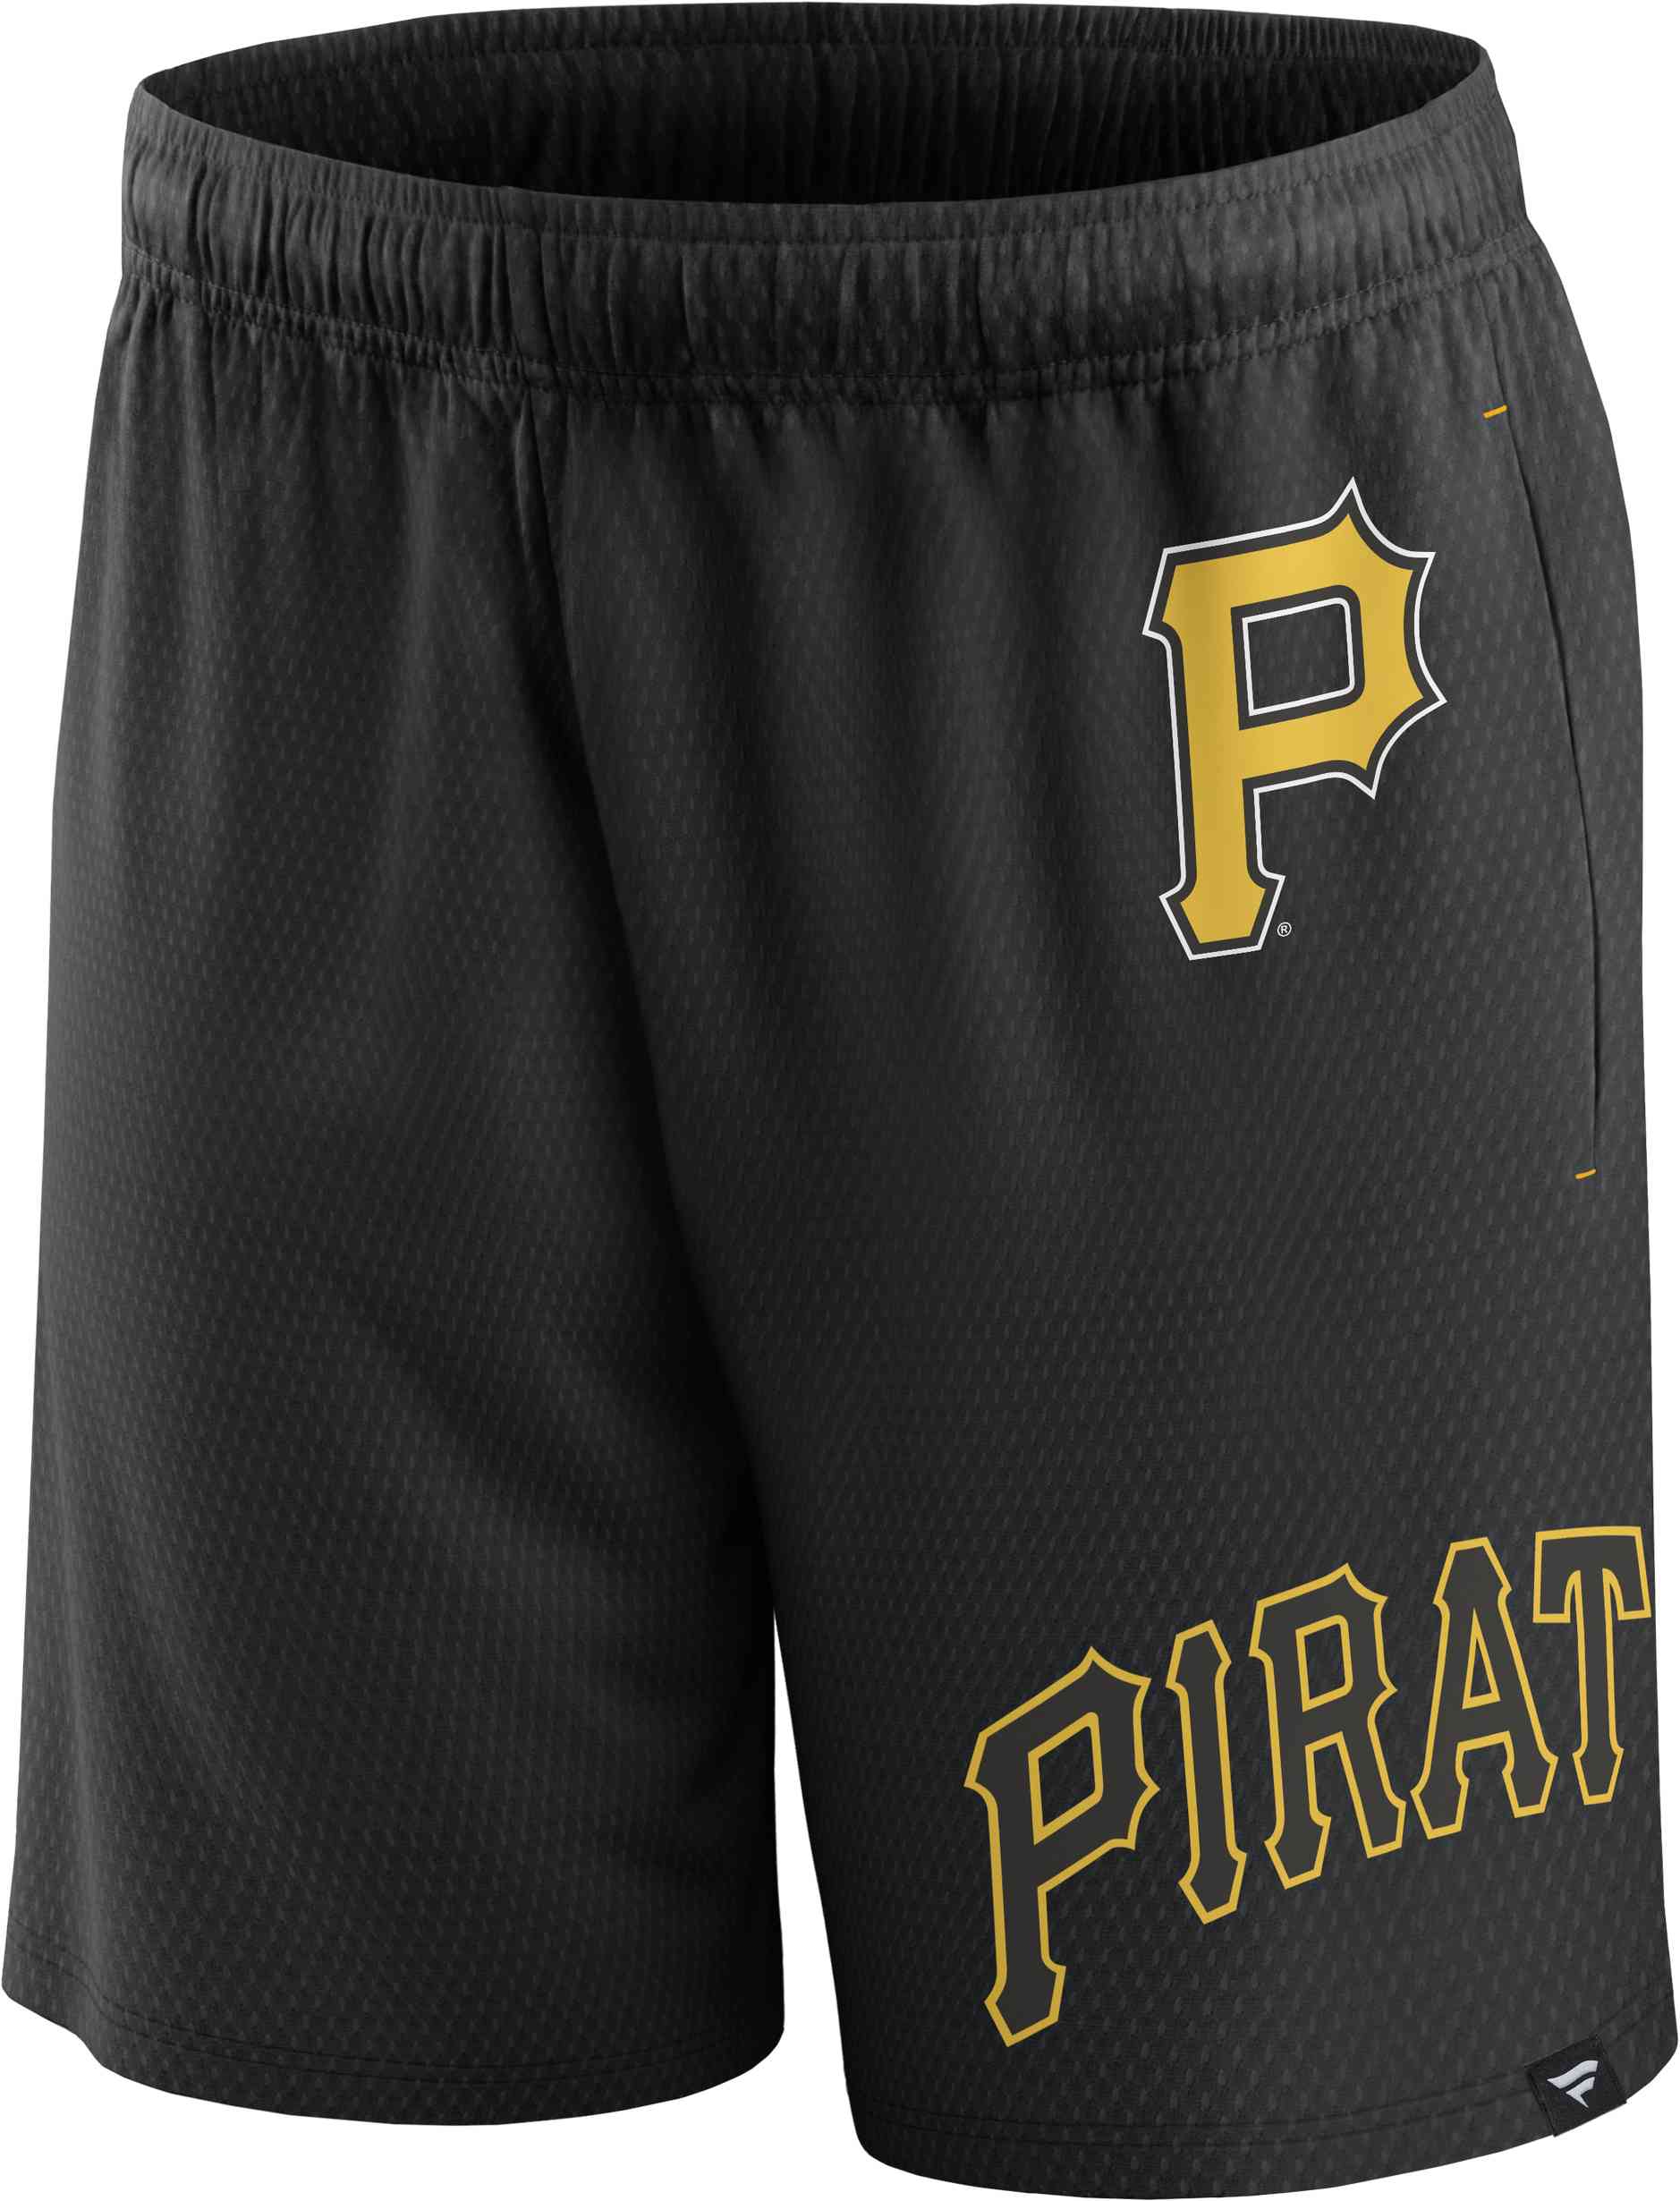 Fanatics - MLB Pittsburgh Pirates Mesh Shorts